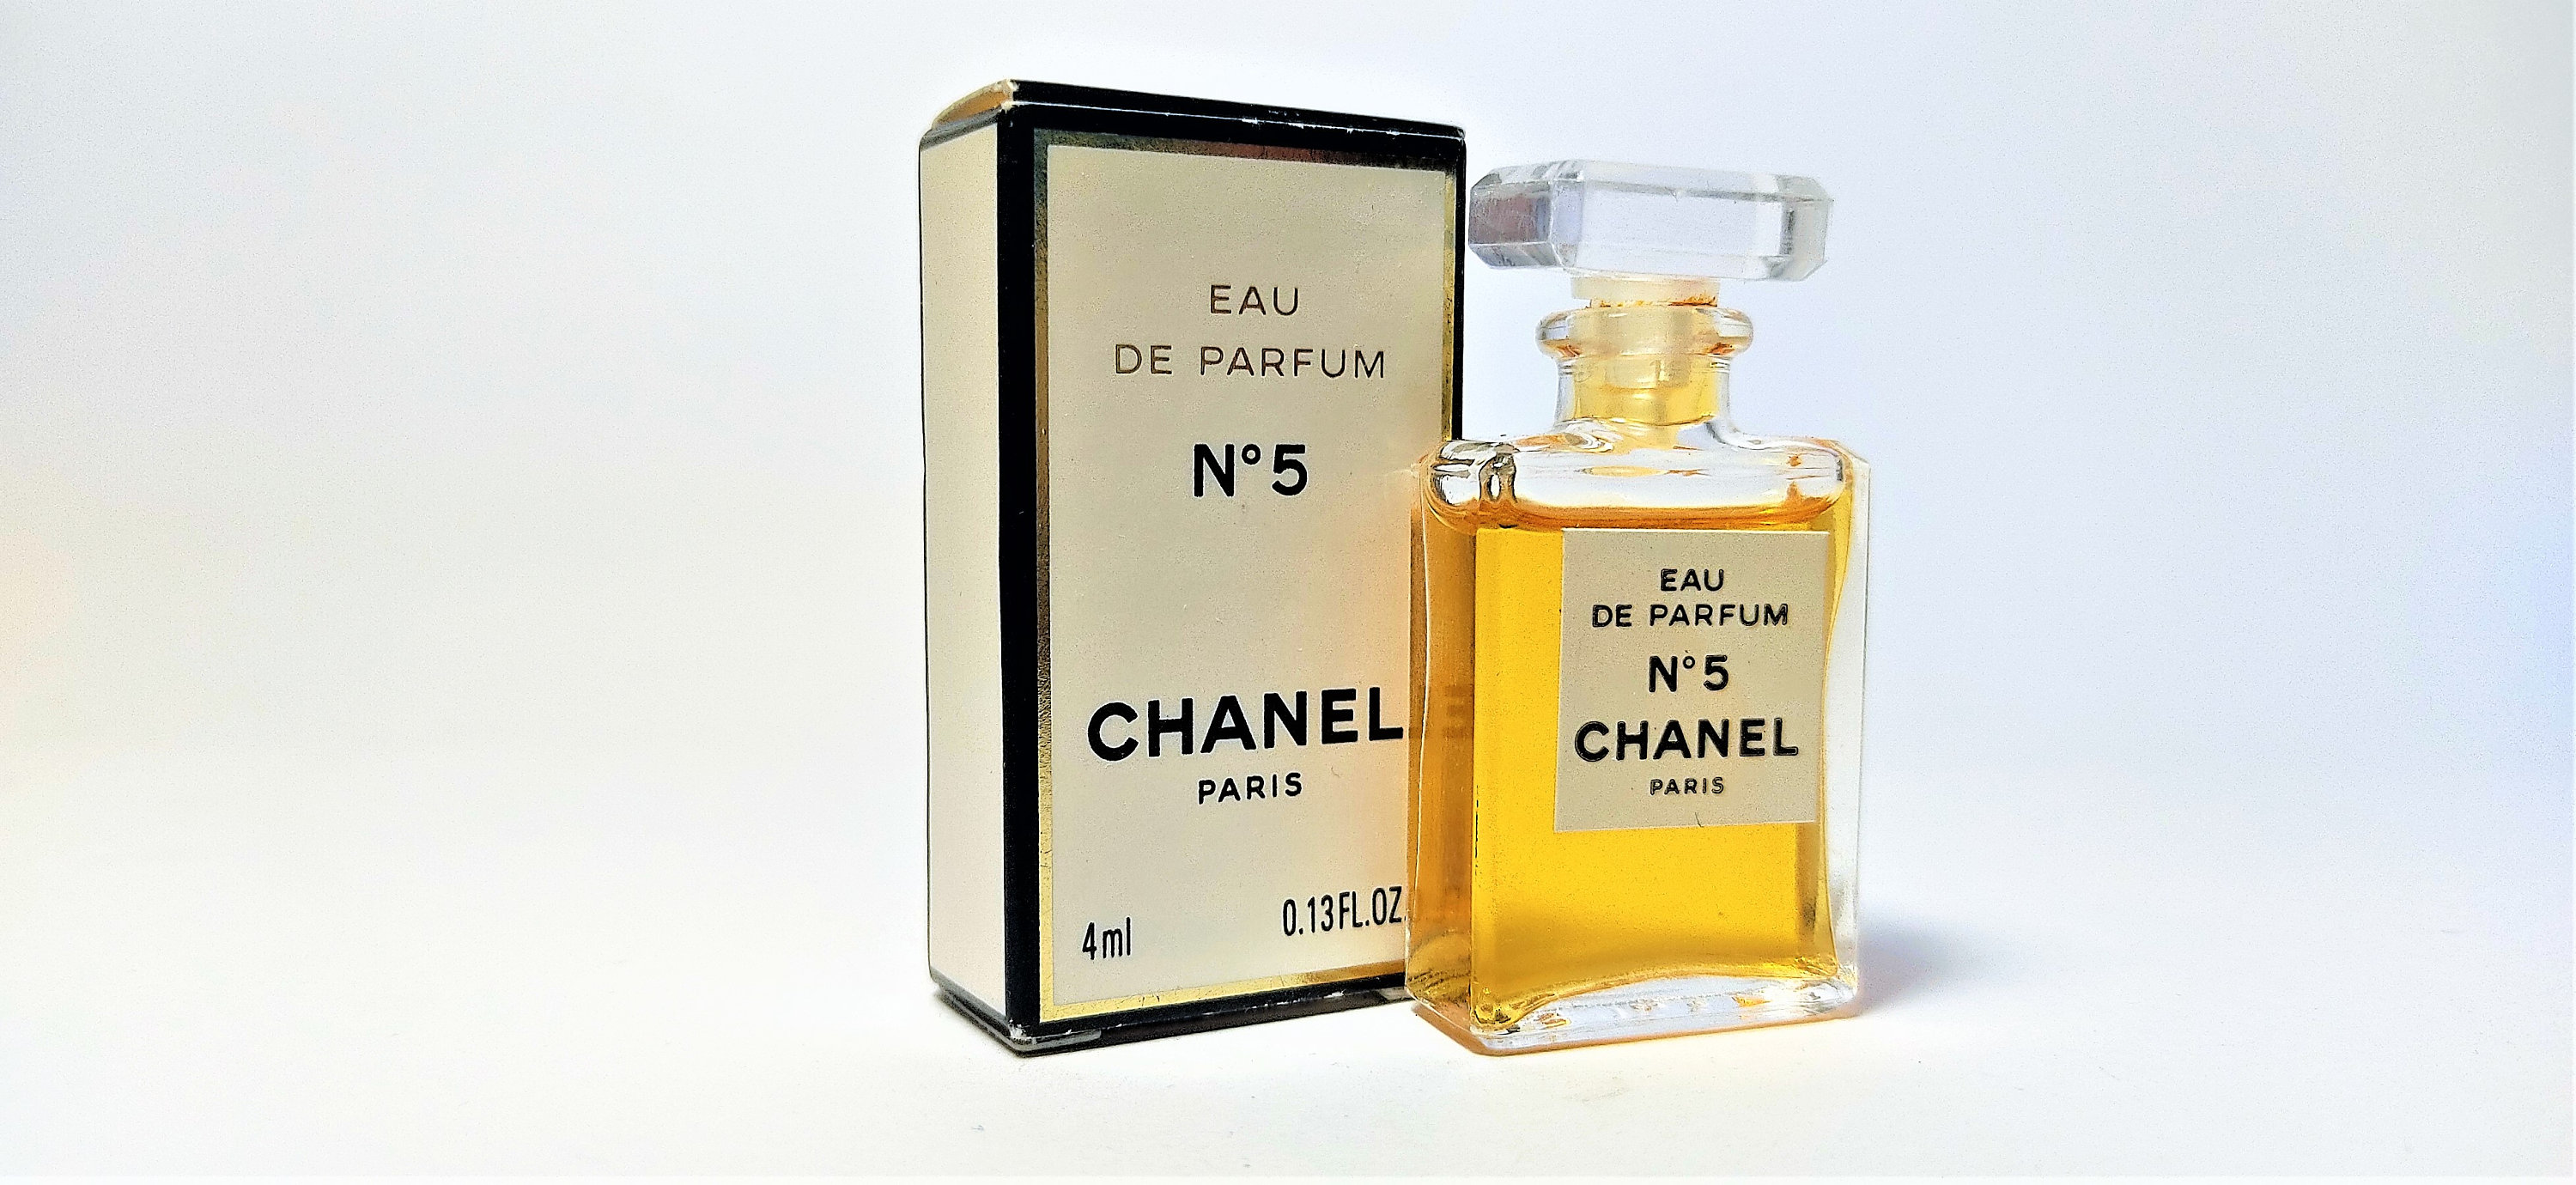 miniature perfume coco chanel